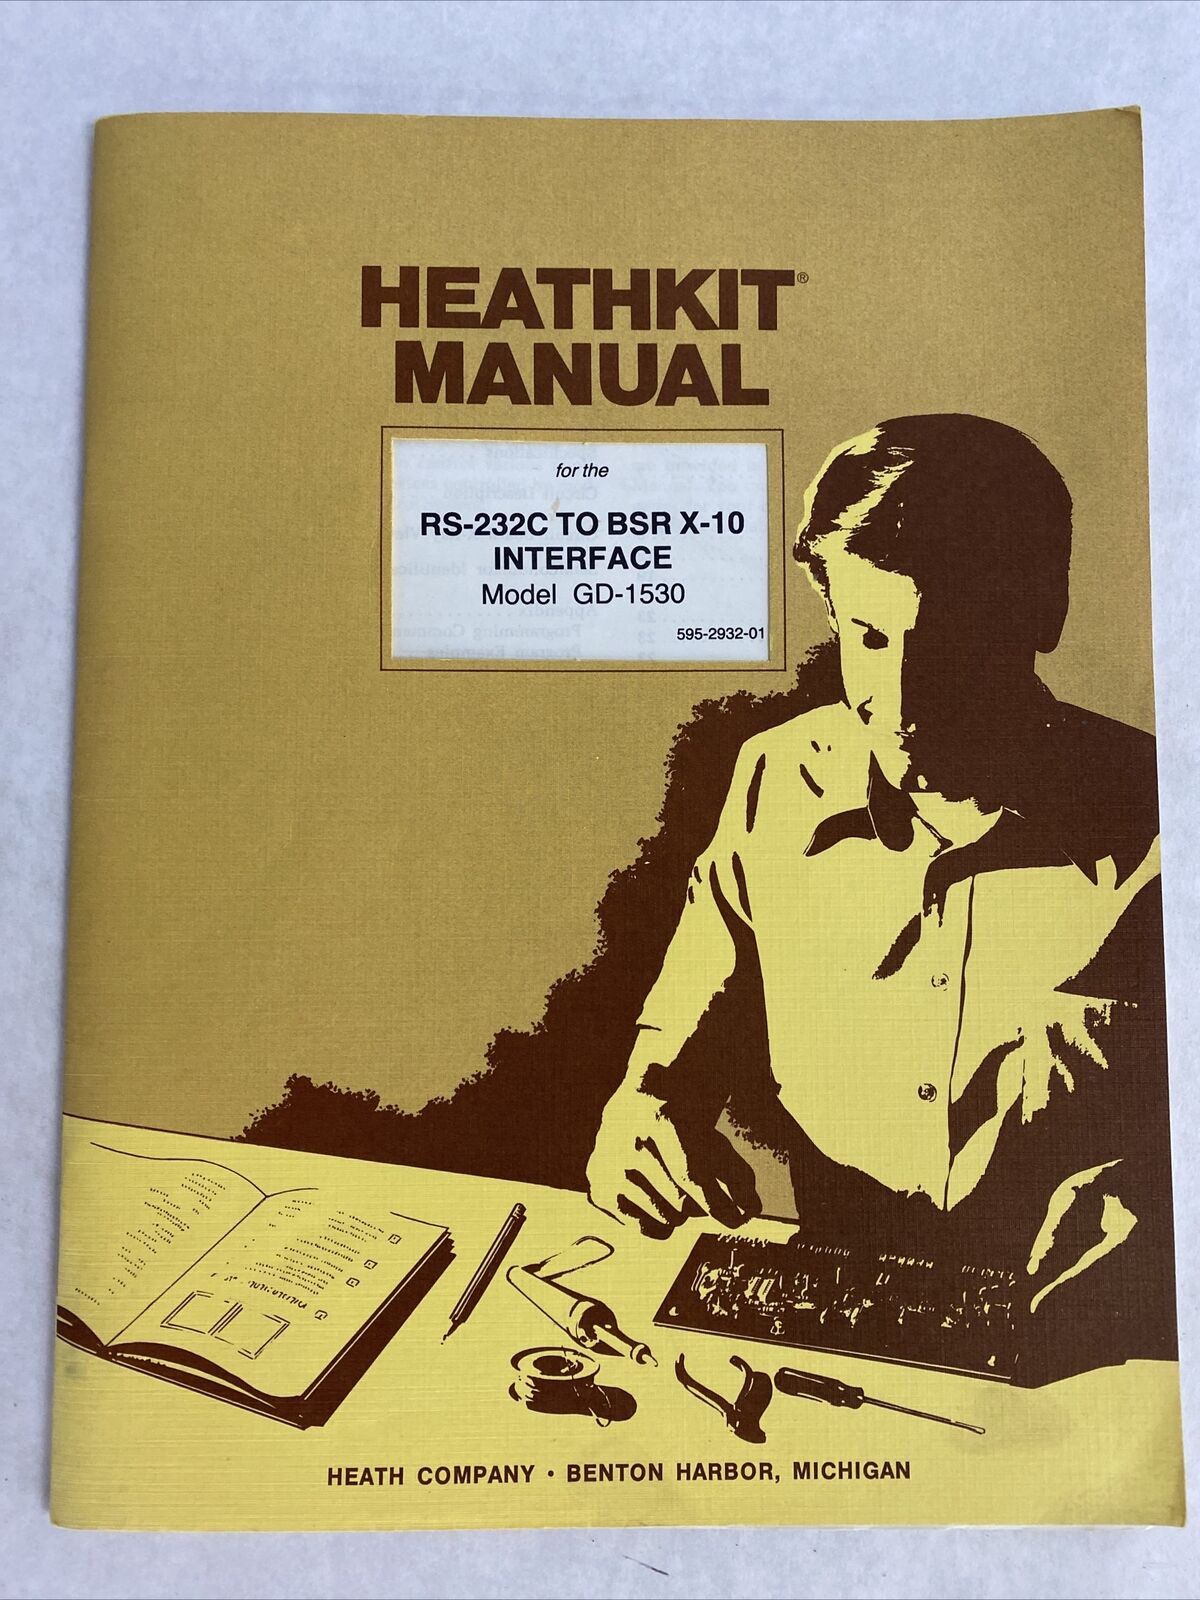 Heathkit GD-1530 Manual RS-232C to BSR X-10 Interface 1983 595-2932-01